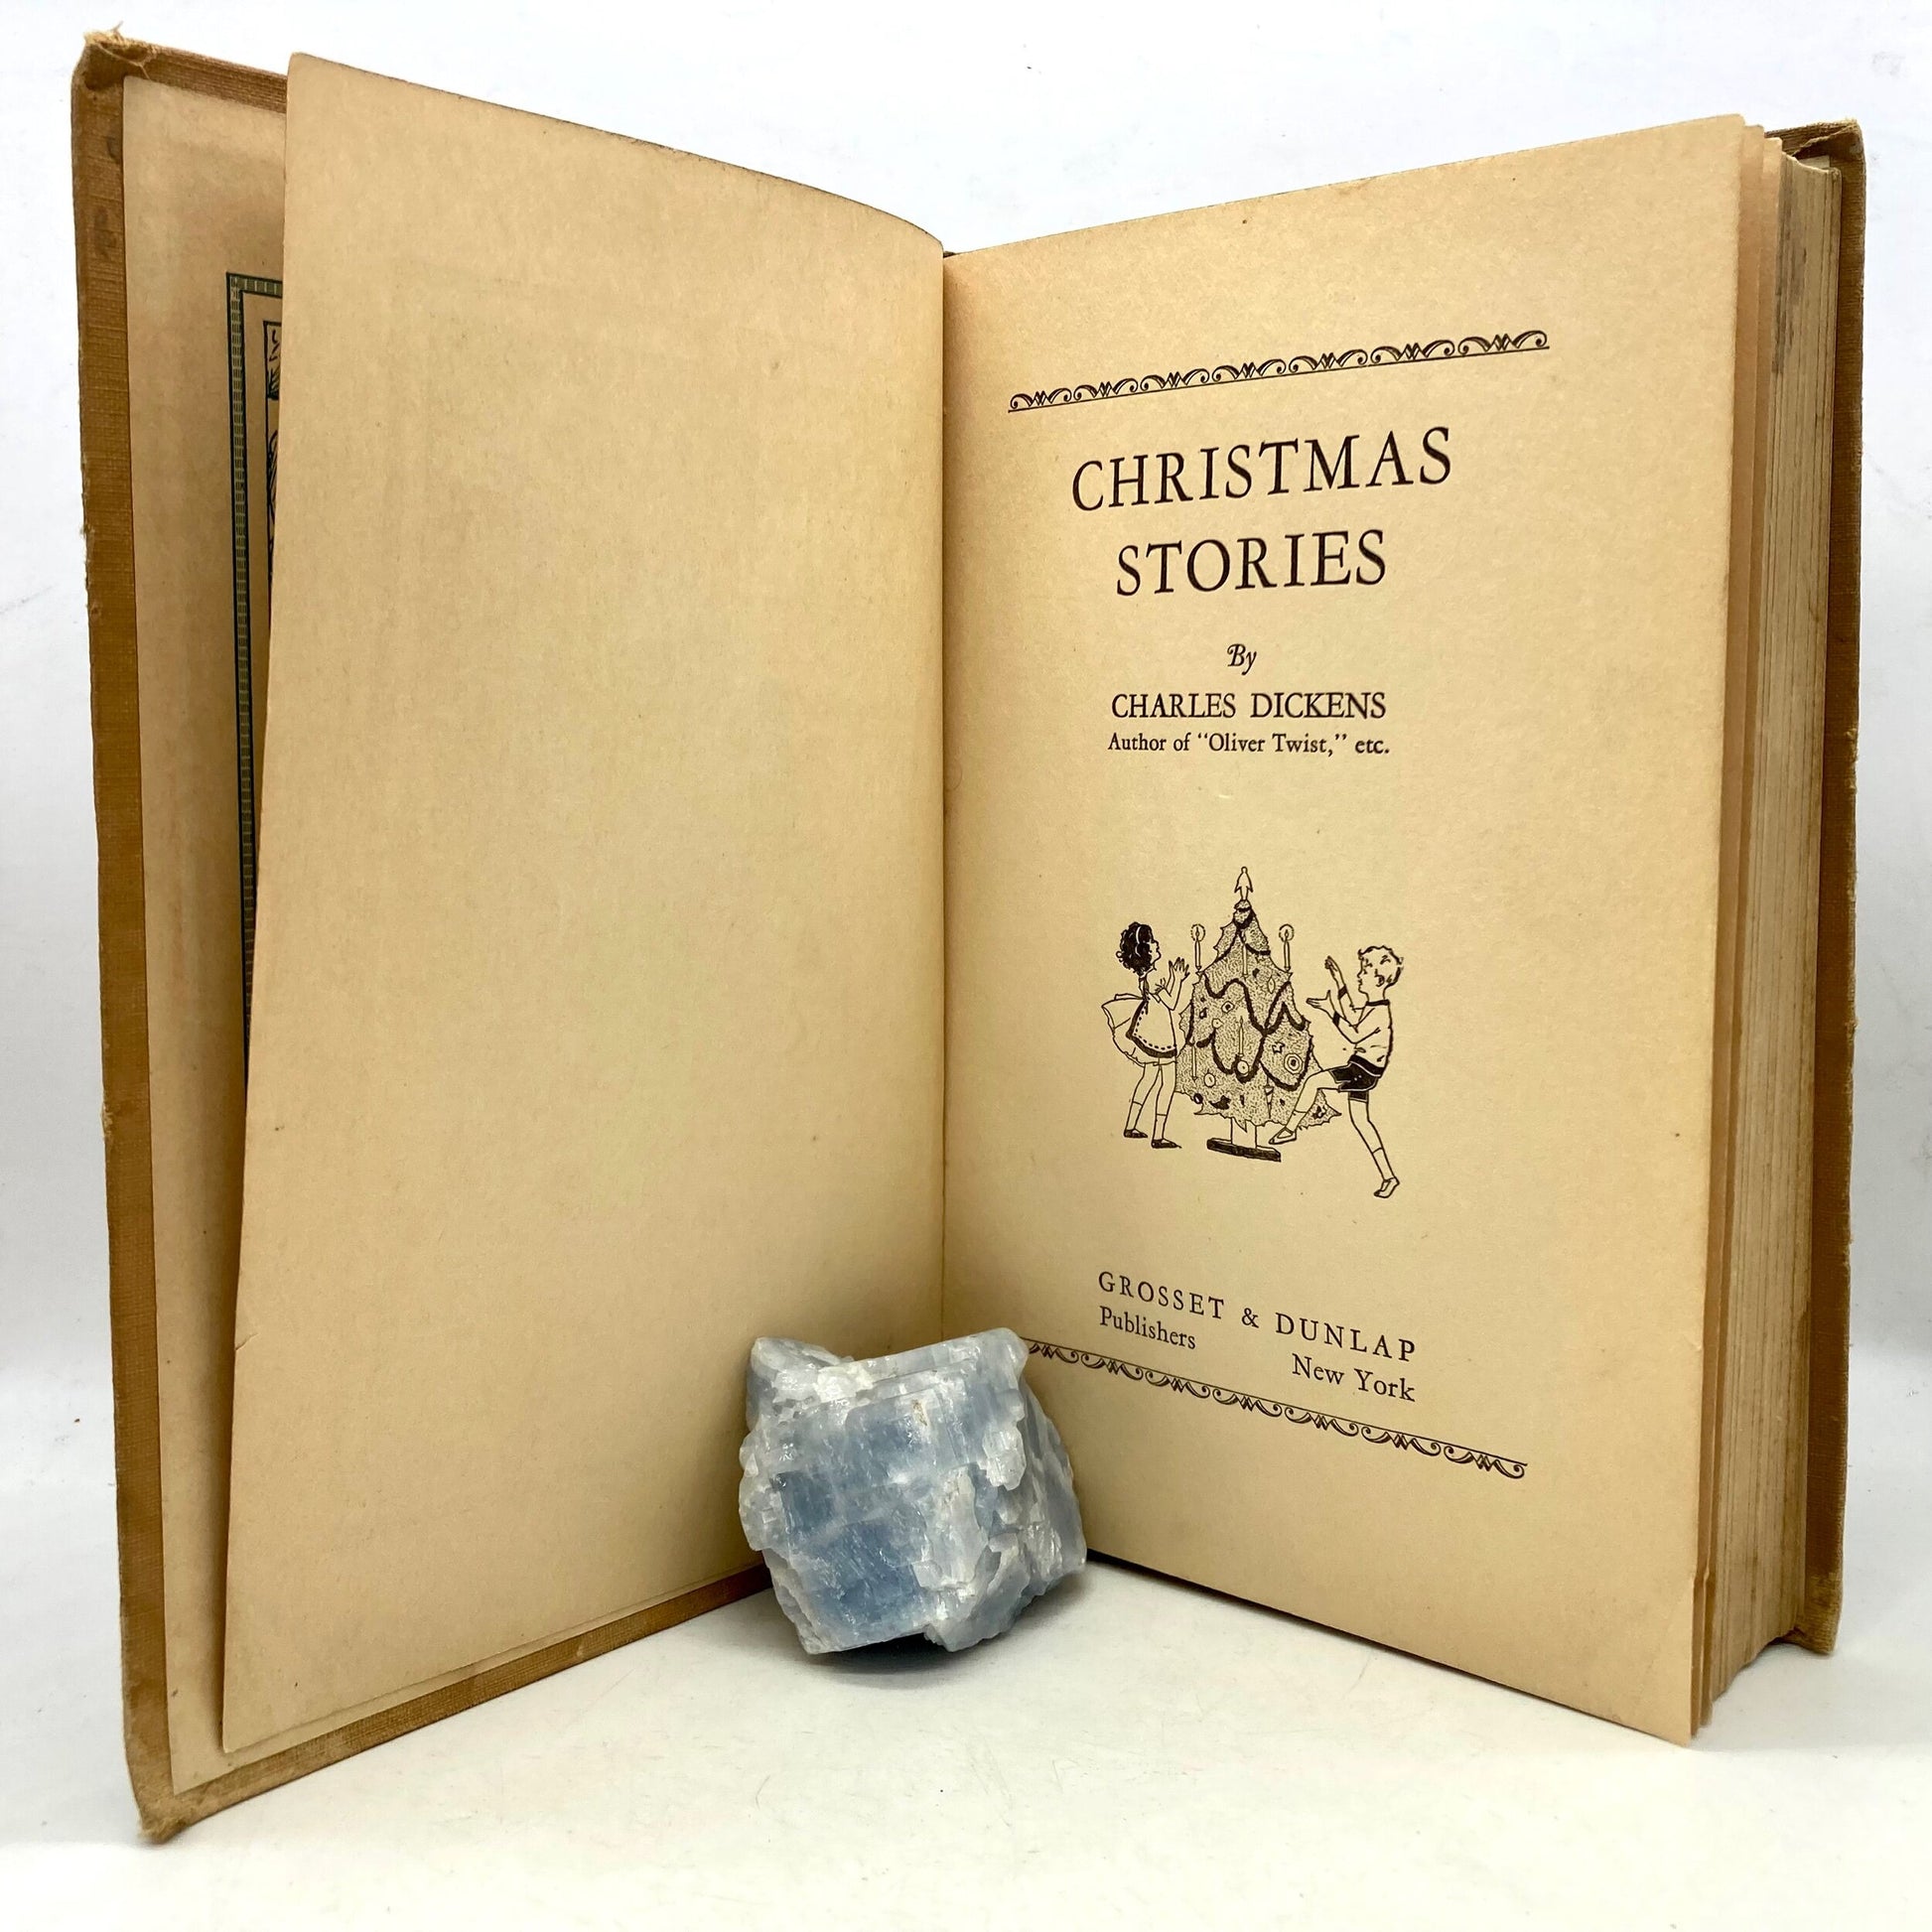 DICKENS, Charles "Christmas Stories" [Grosset & Dunlap, c1940] - Buzz Bookstore